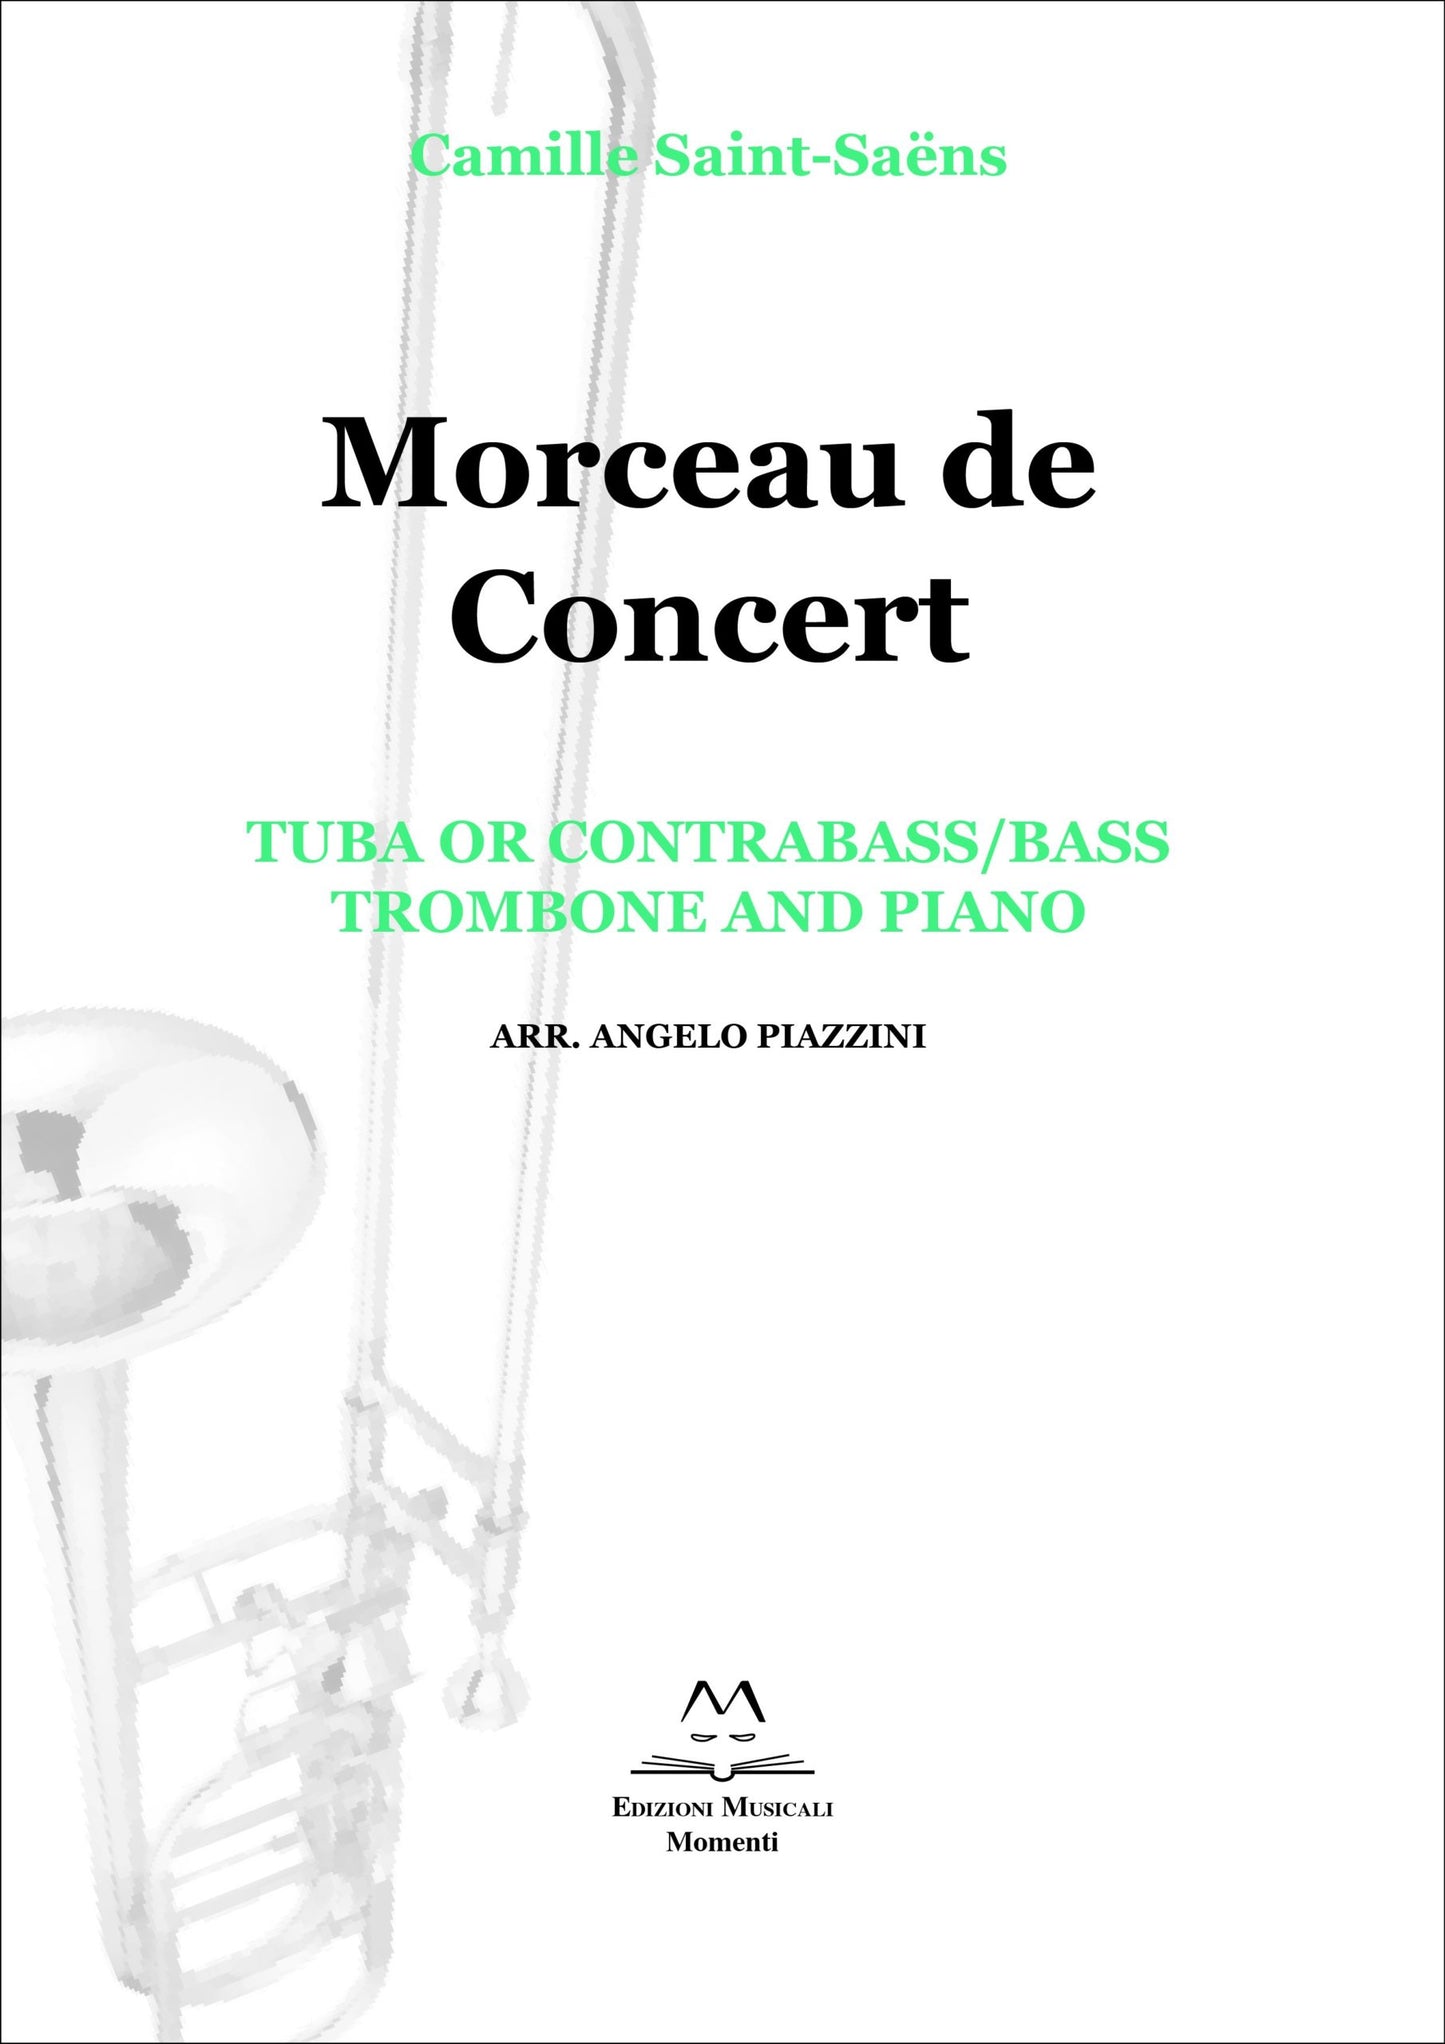 Morceau de Concert - Tuba or contrabass/bass, trombone and piano arr. Angelo Piazzini